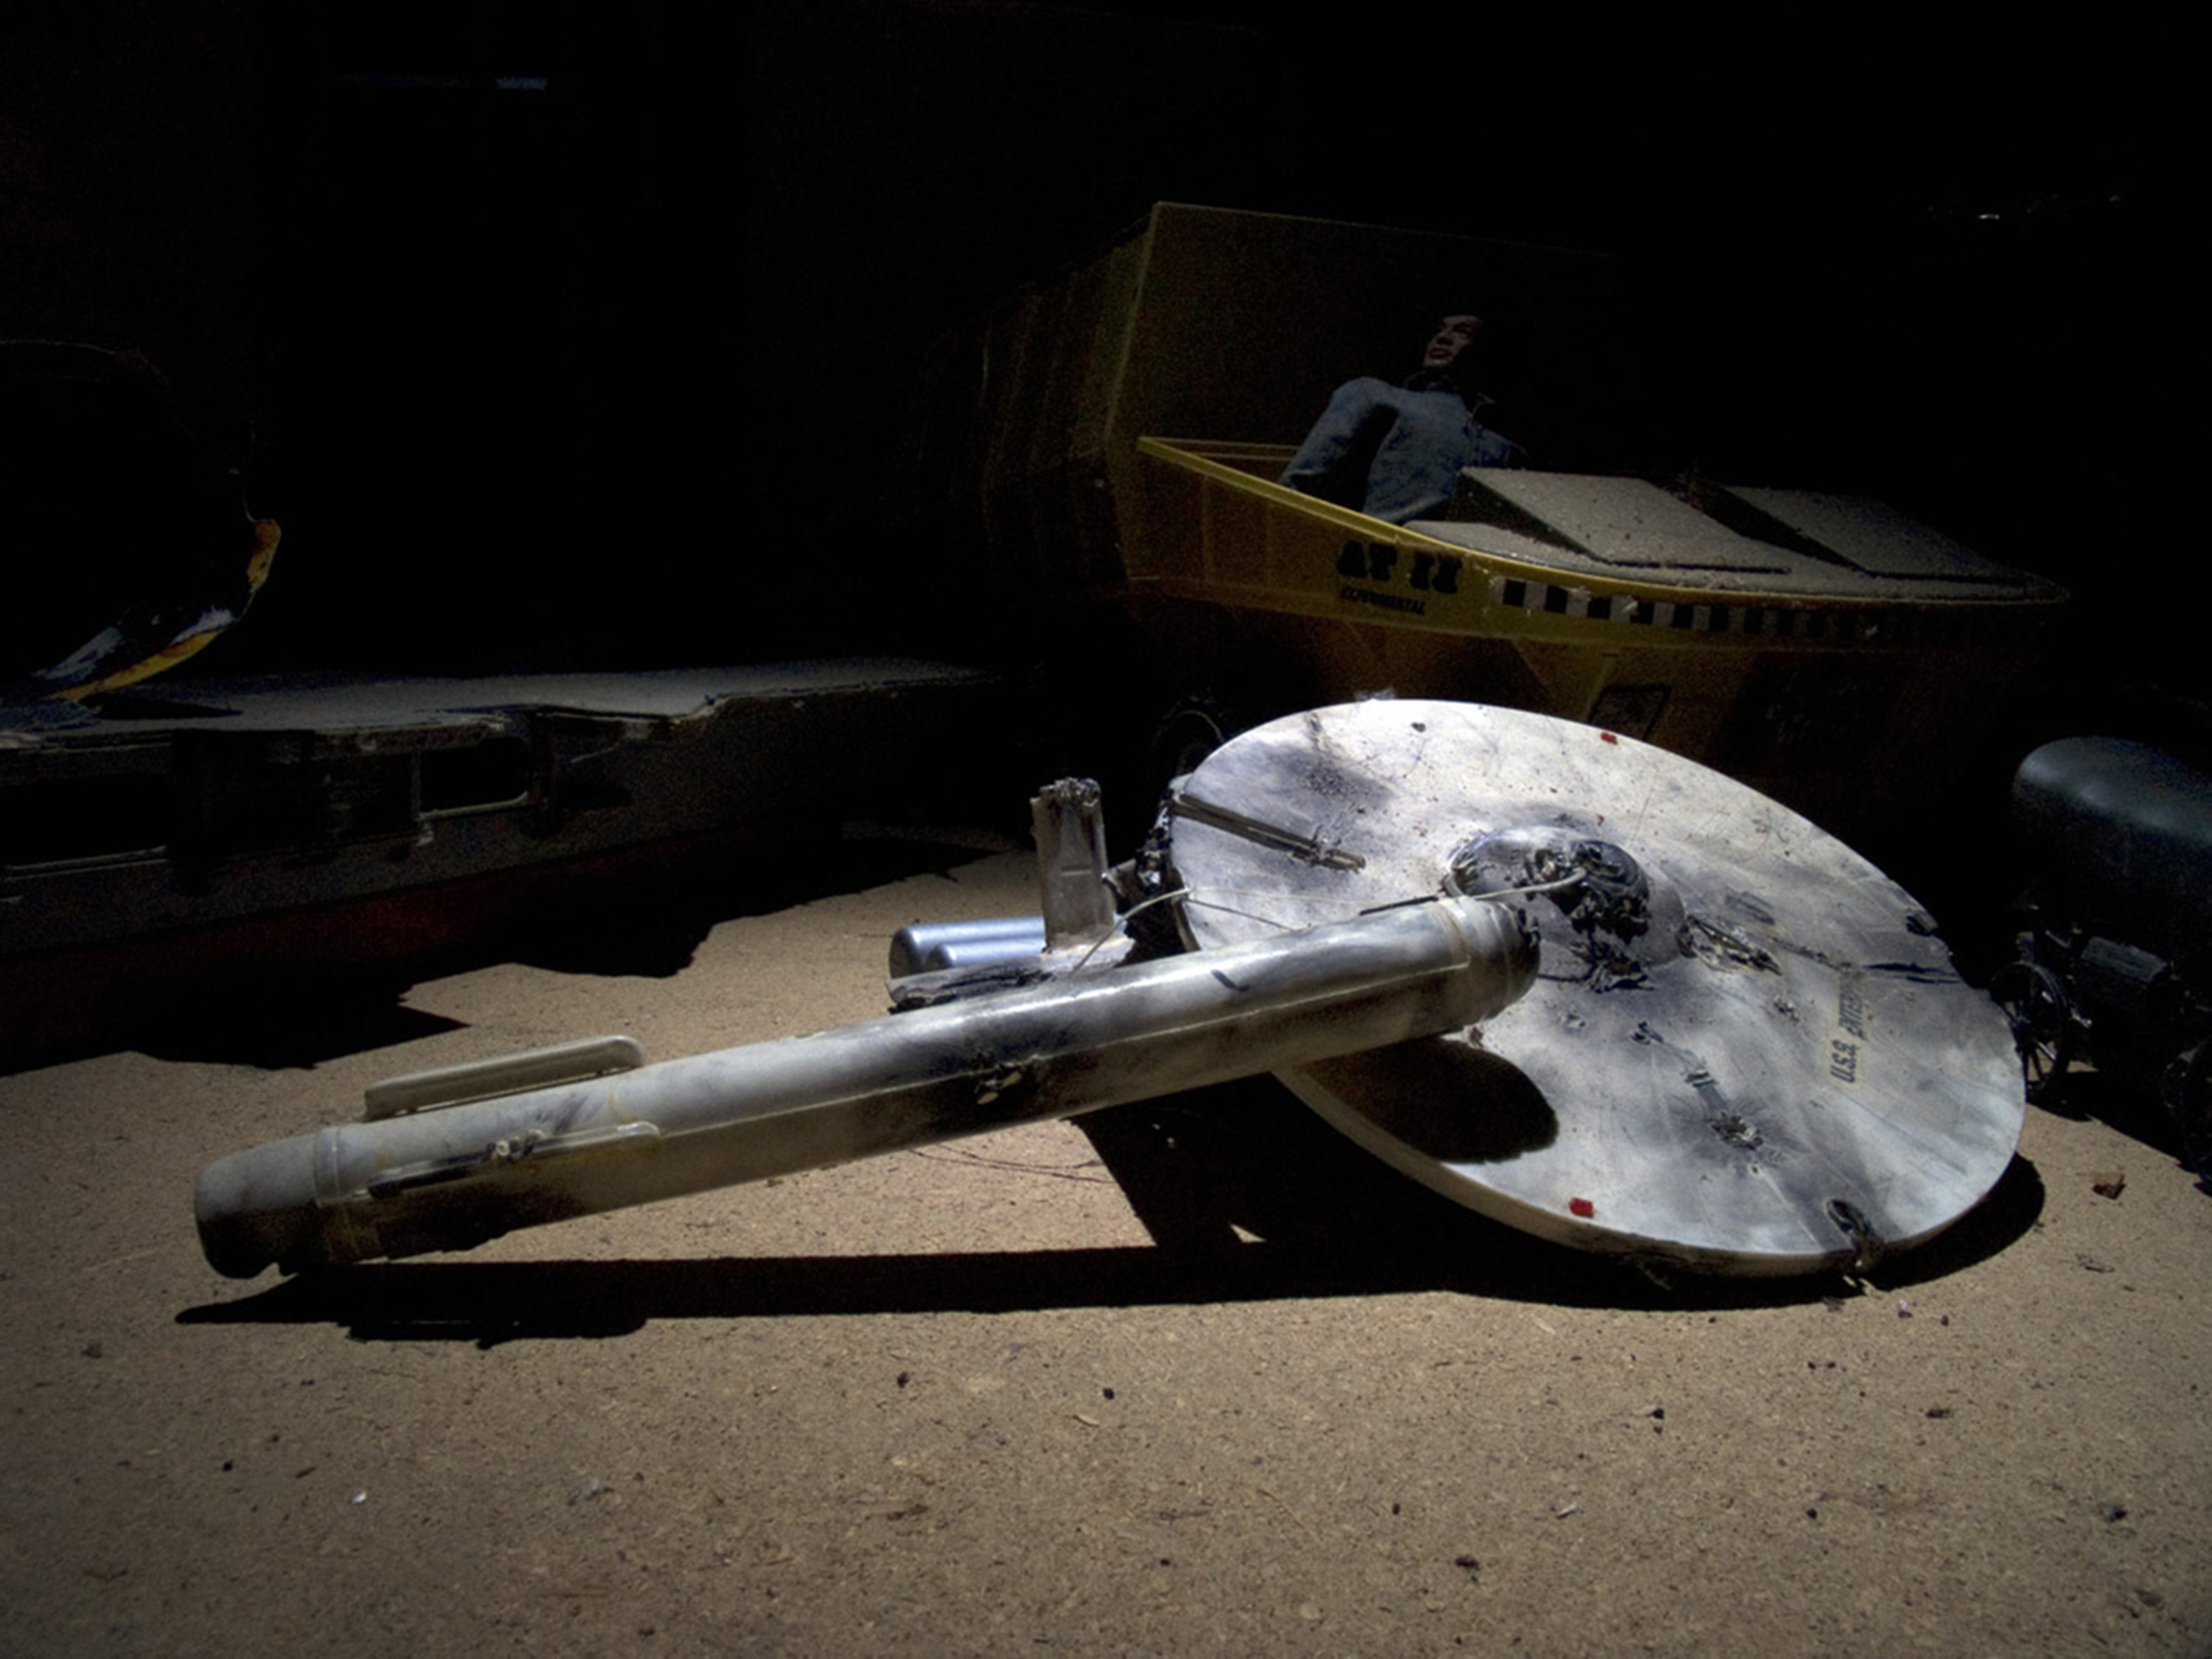 Broken scale model of starship U.S.S. Enterprise